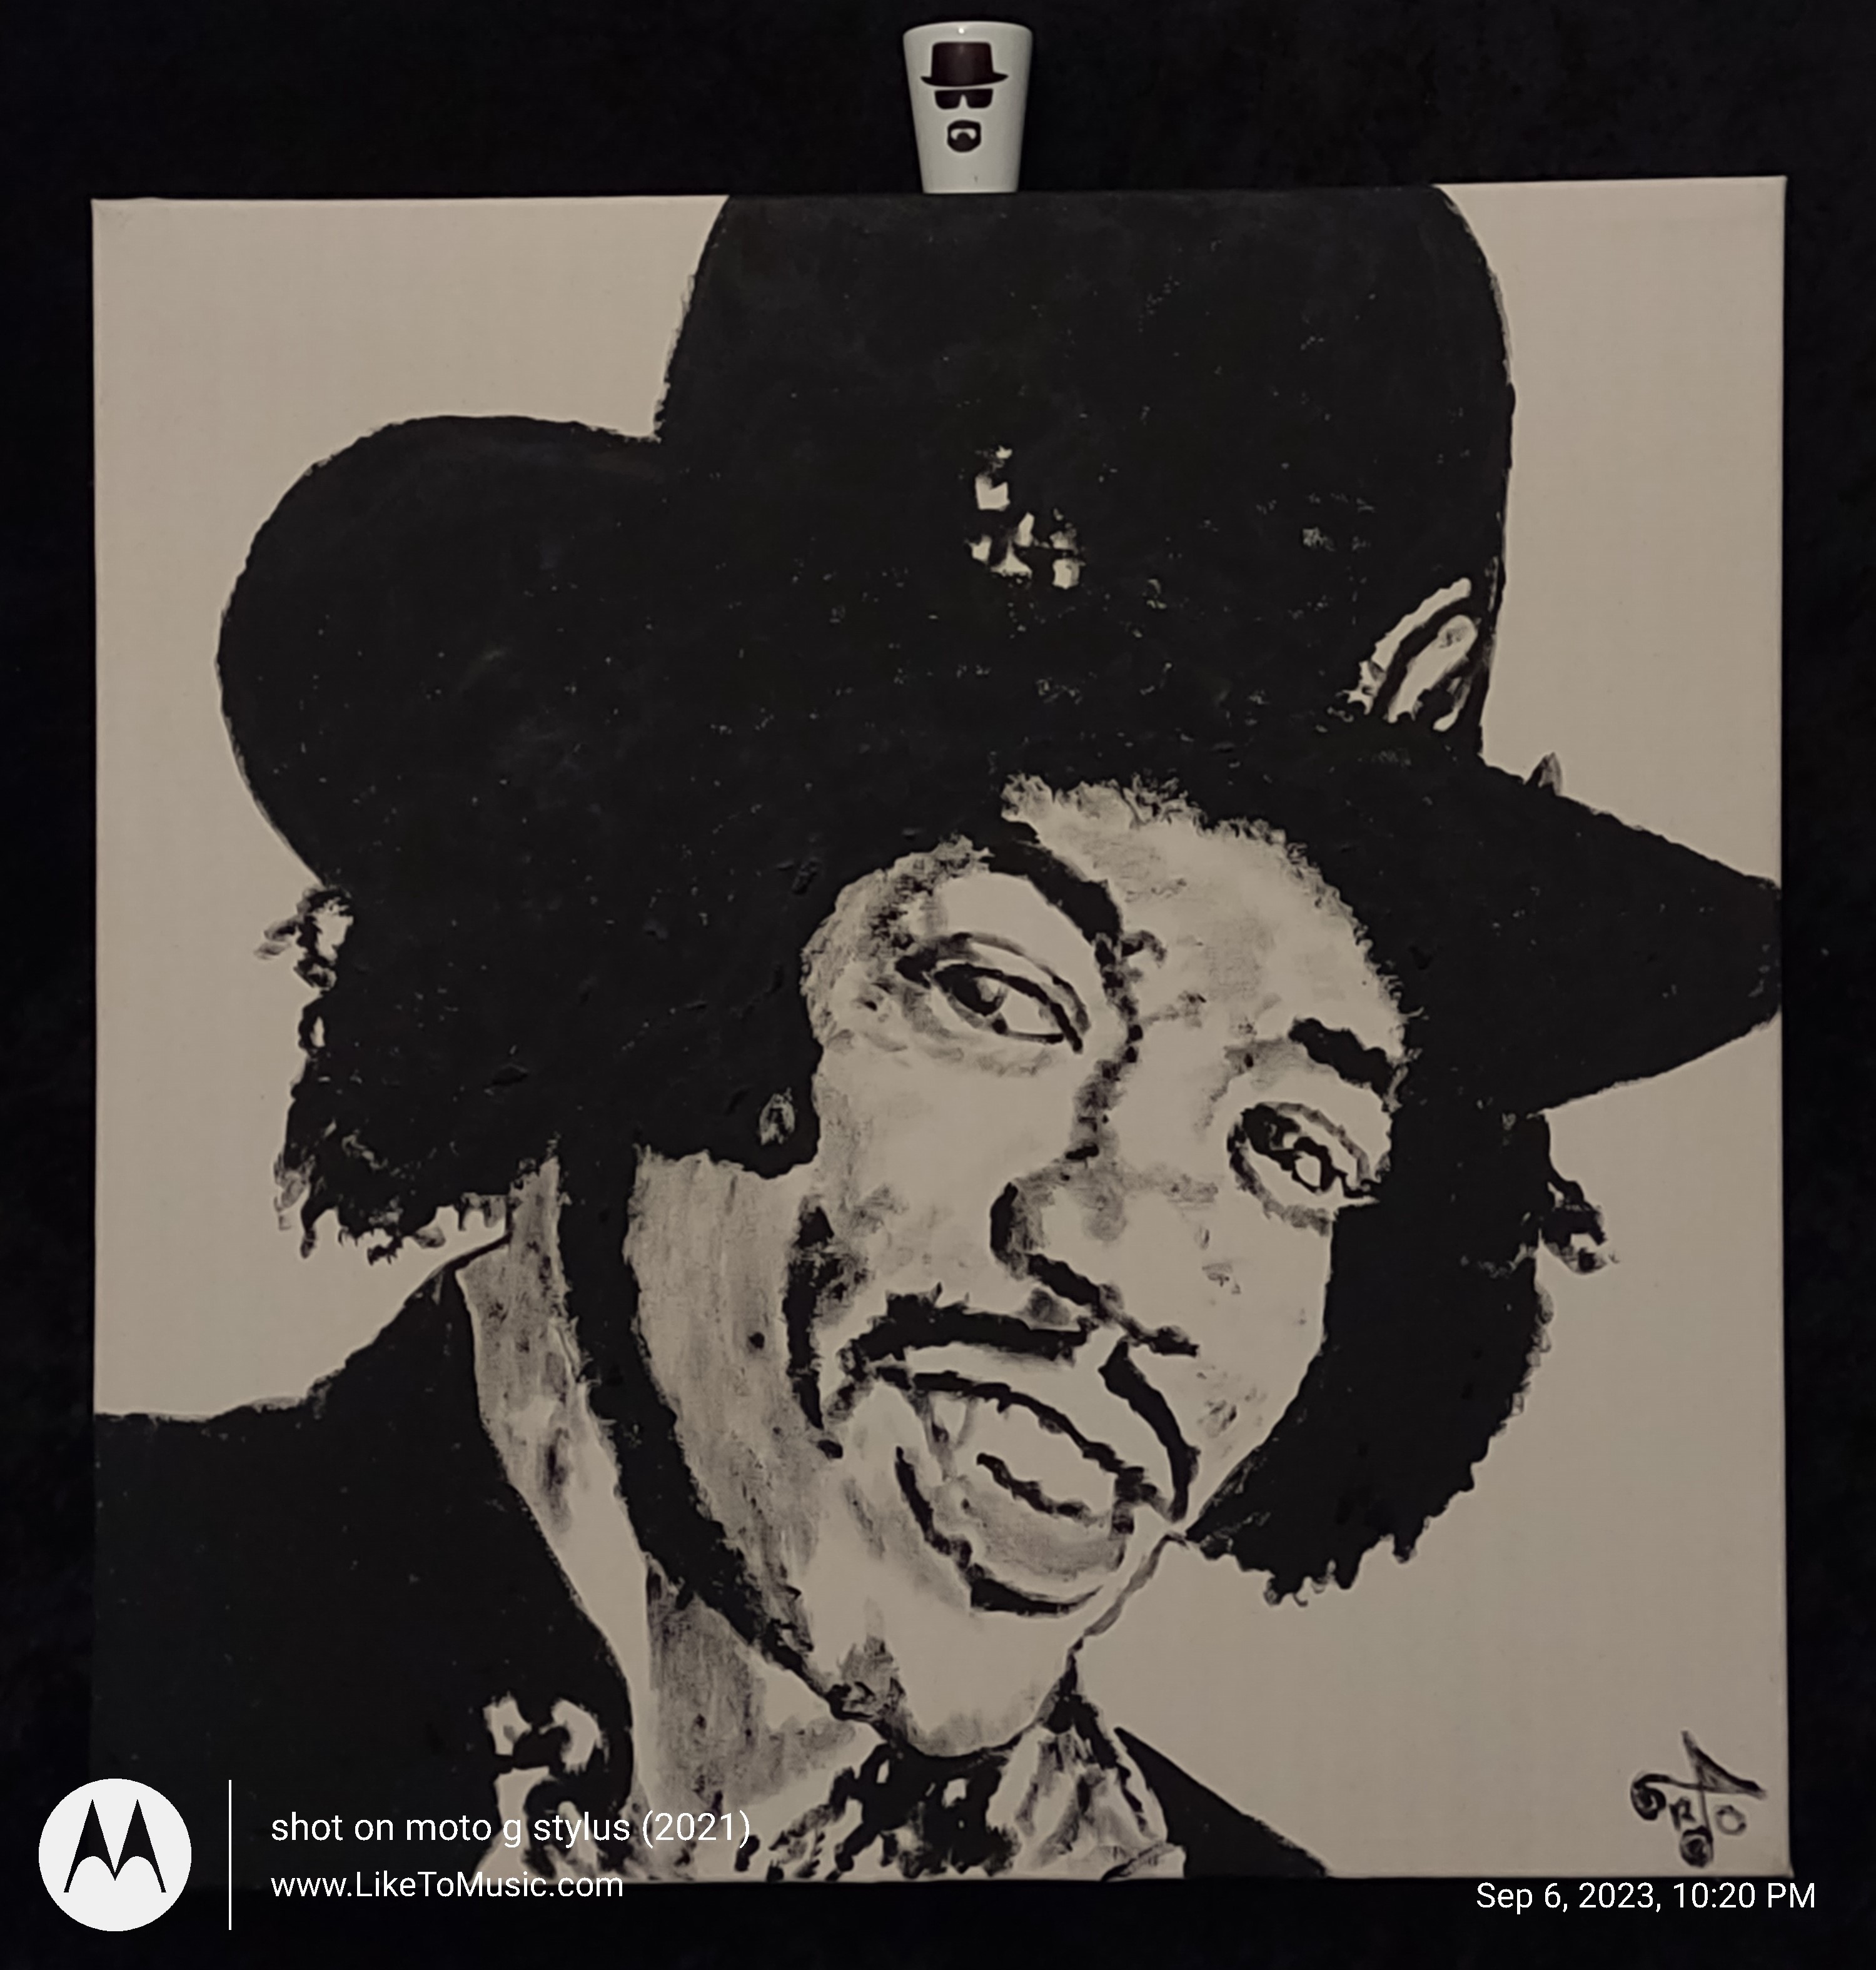 Jimmy Hendrix portrait